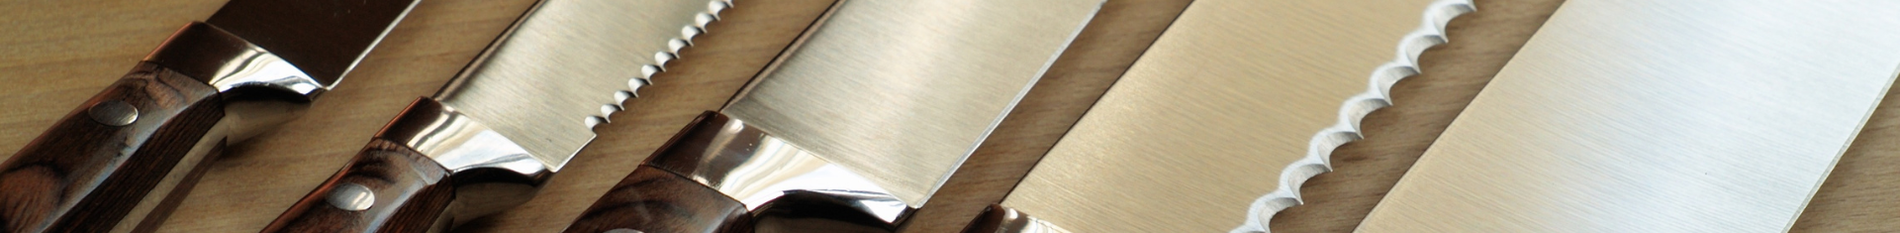 Blog-Banner-knife-safety-sharpening-storage-and-maintenance-2